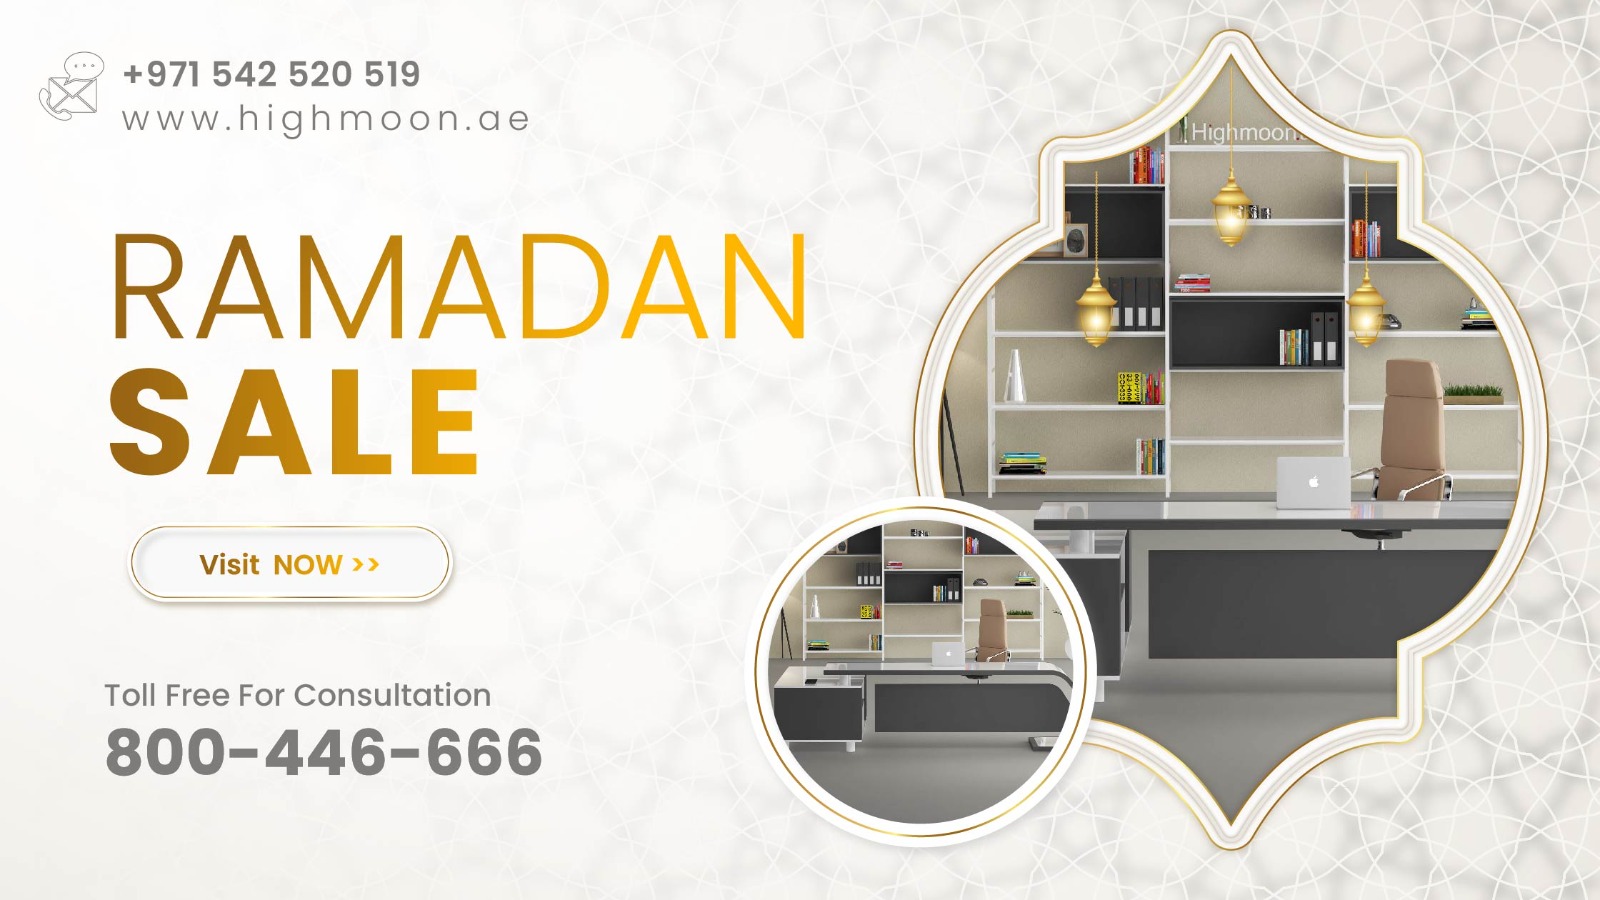 Ramadan Office Furniture Sale: Best Discount Offers on Complete S